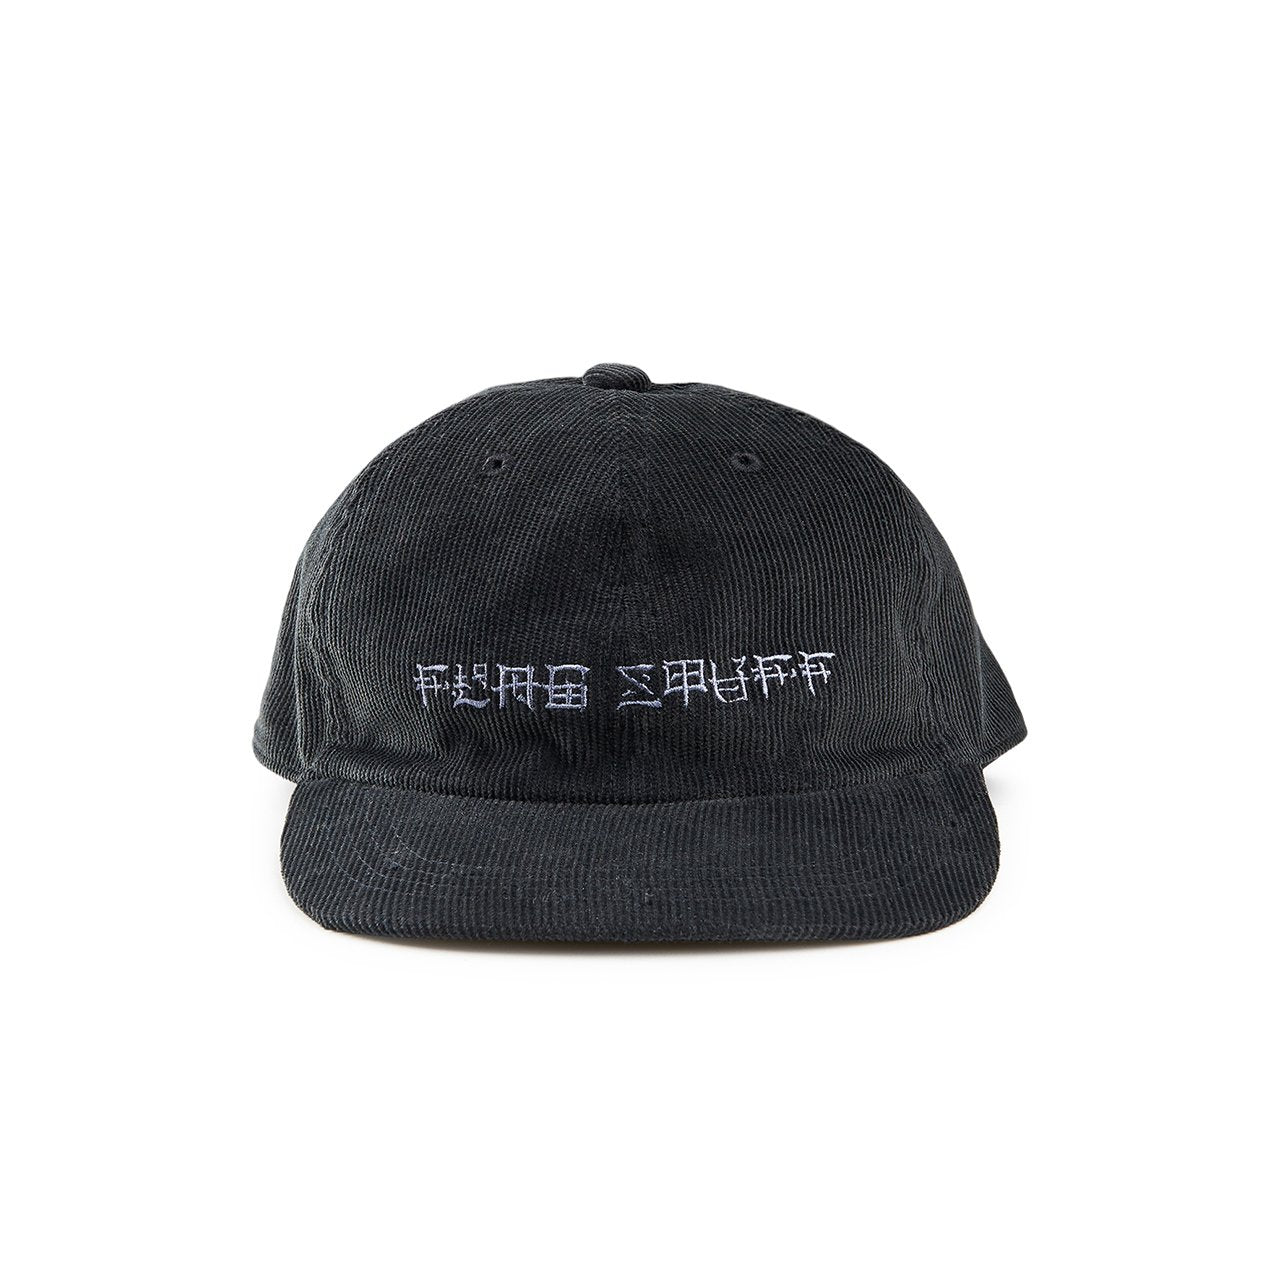 flagstuff flagstuff "kanji logo" cap (black) 19AW-FS-58